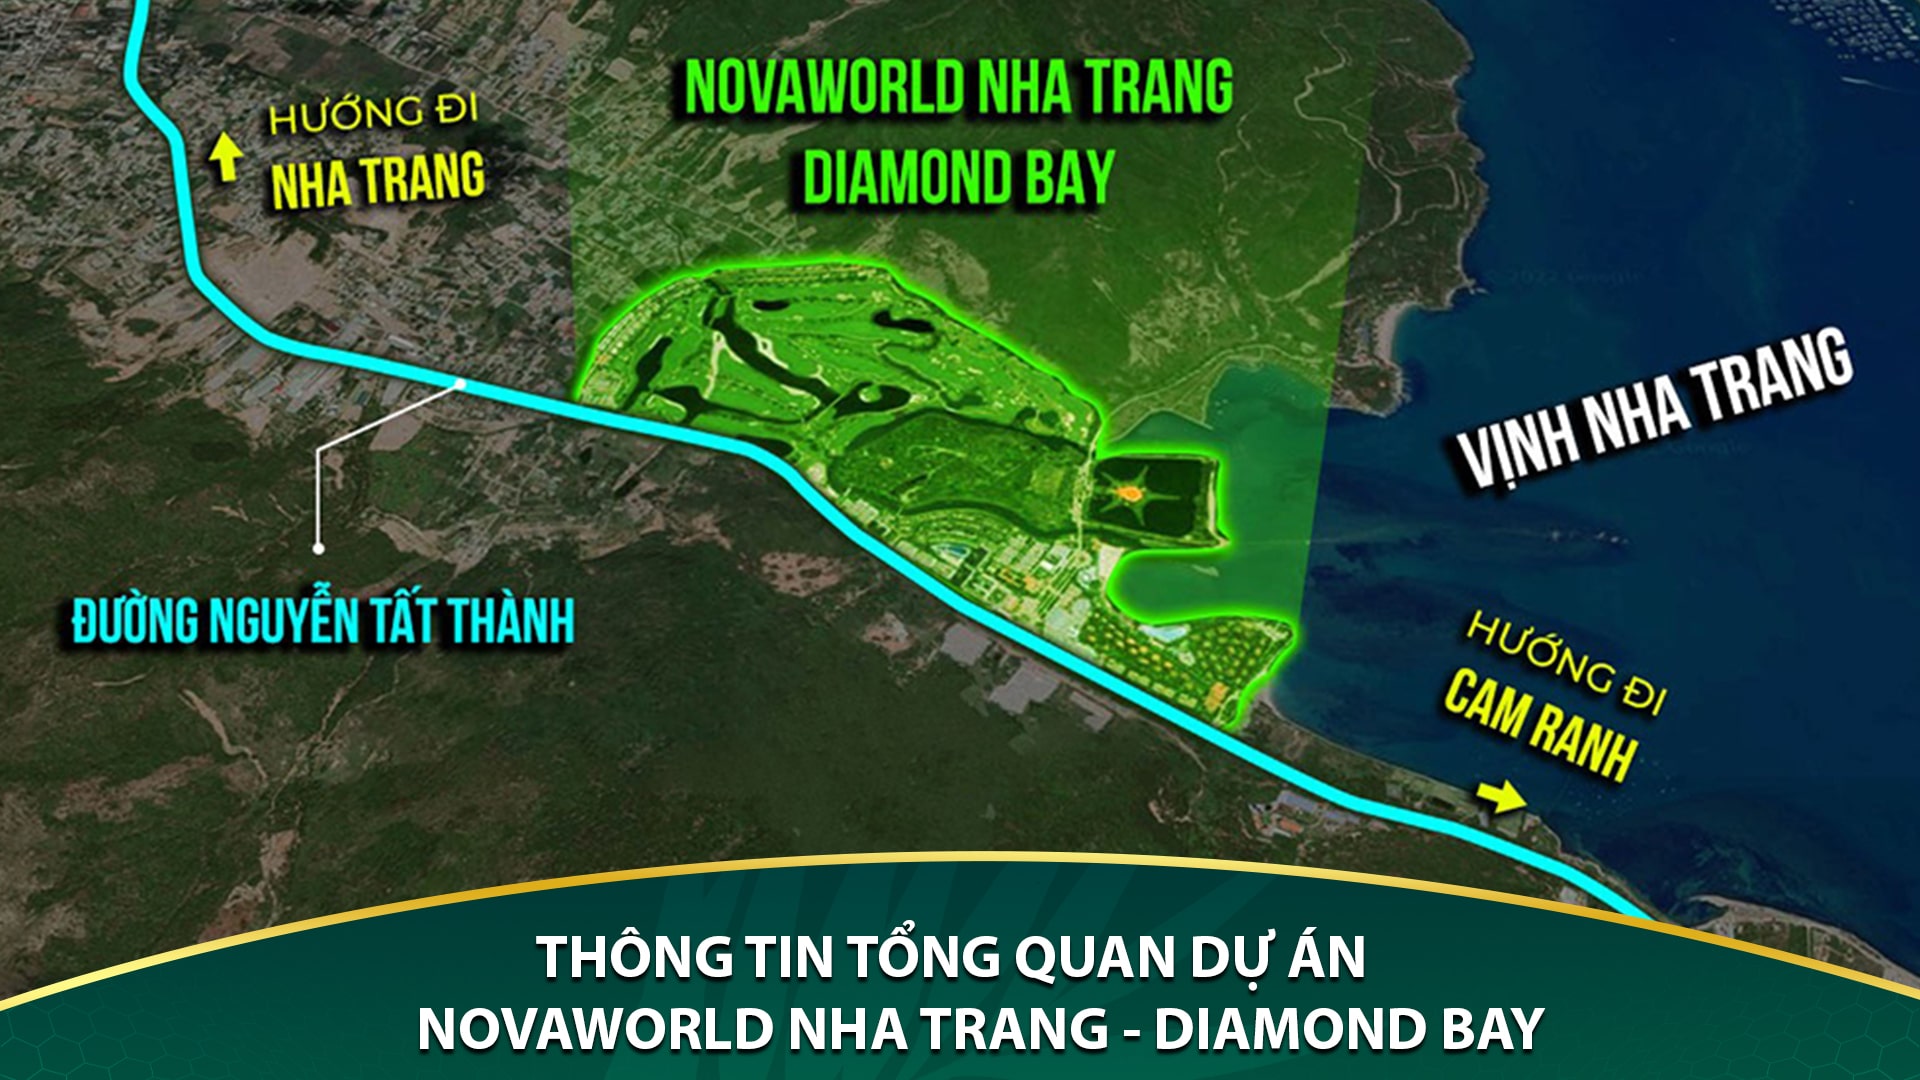 Nova World Nha Trang Diamond Bay